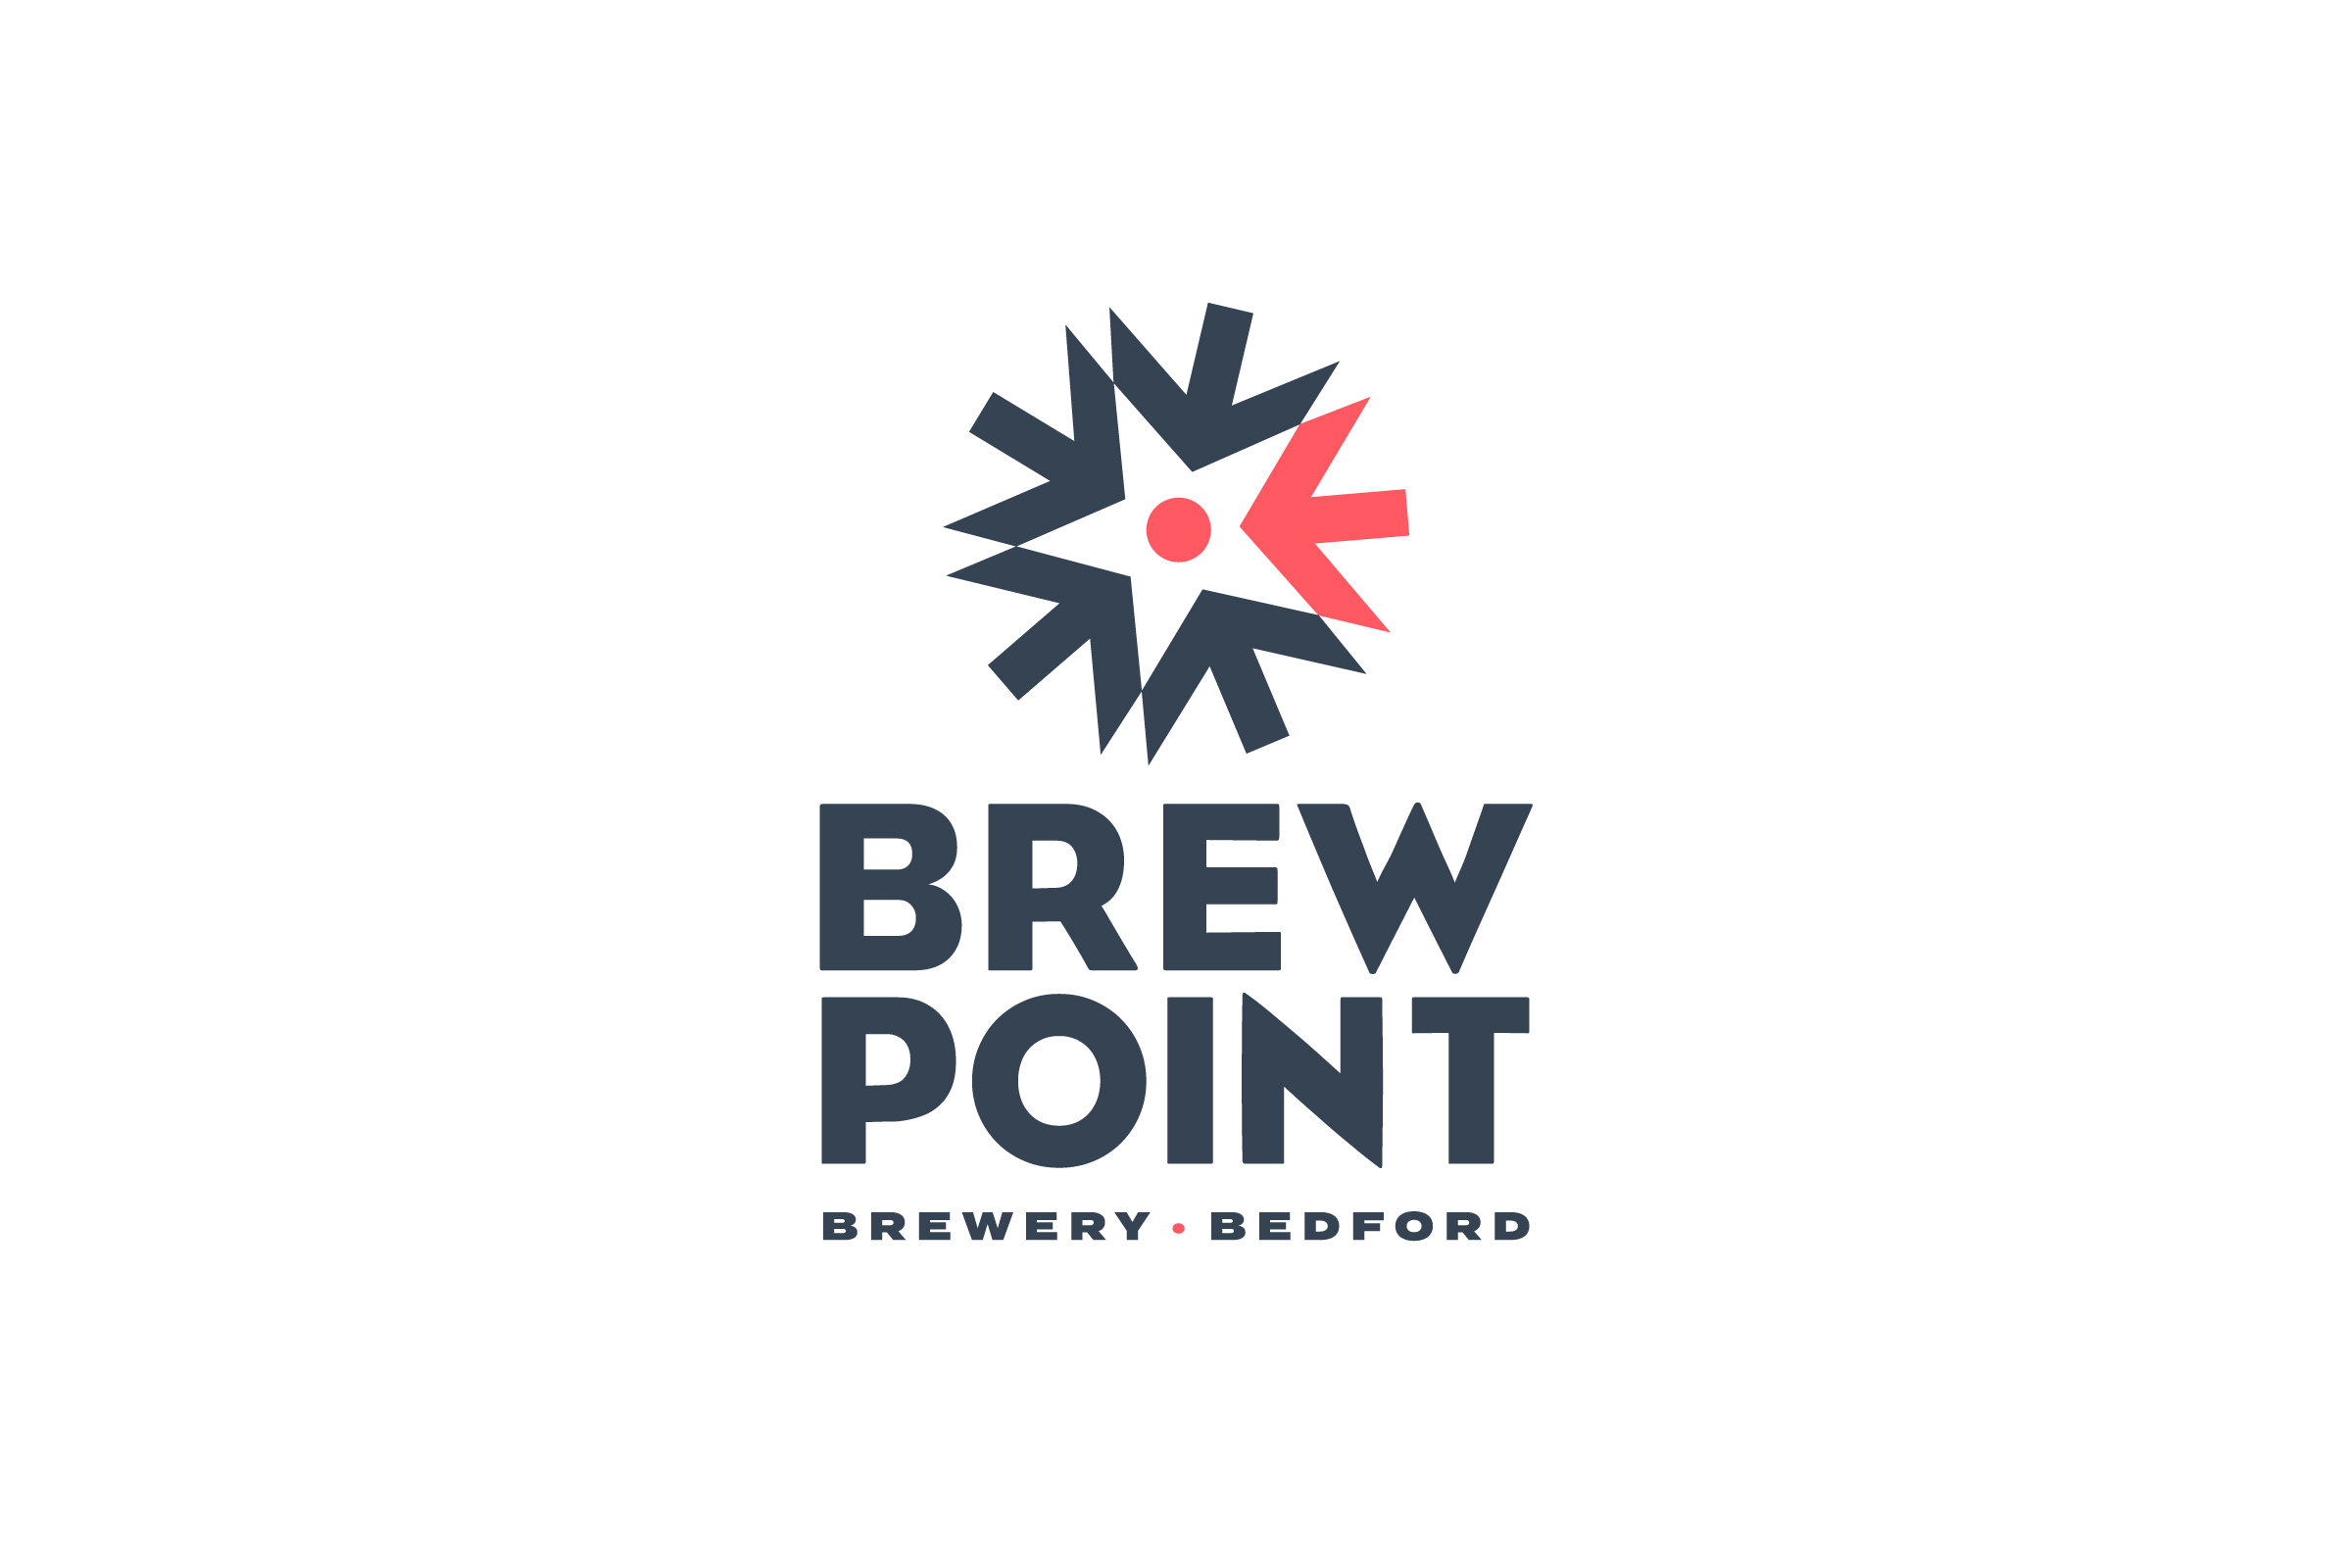 brewpoint design work, branded logo for theoneway